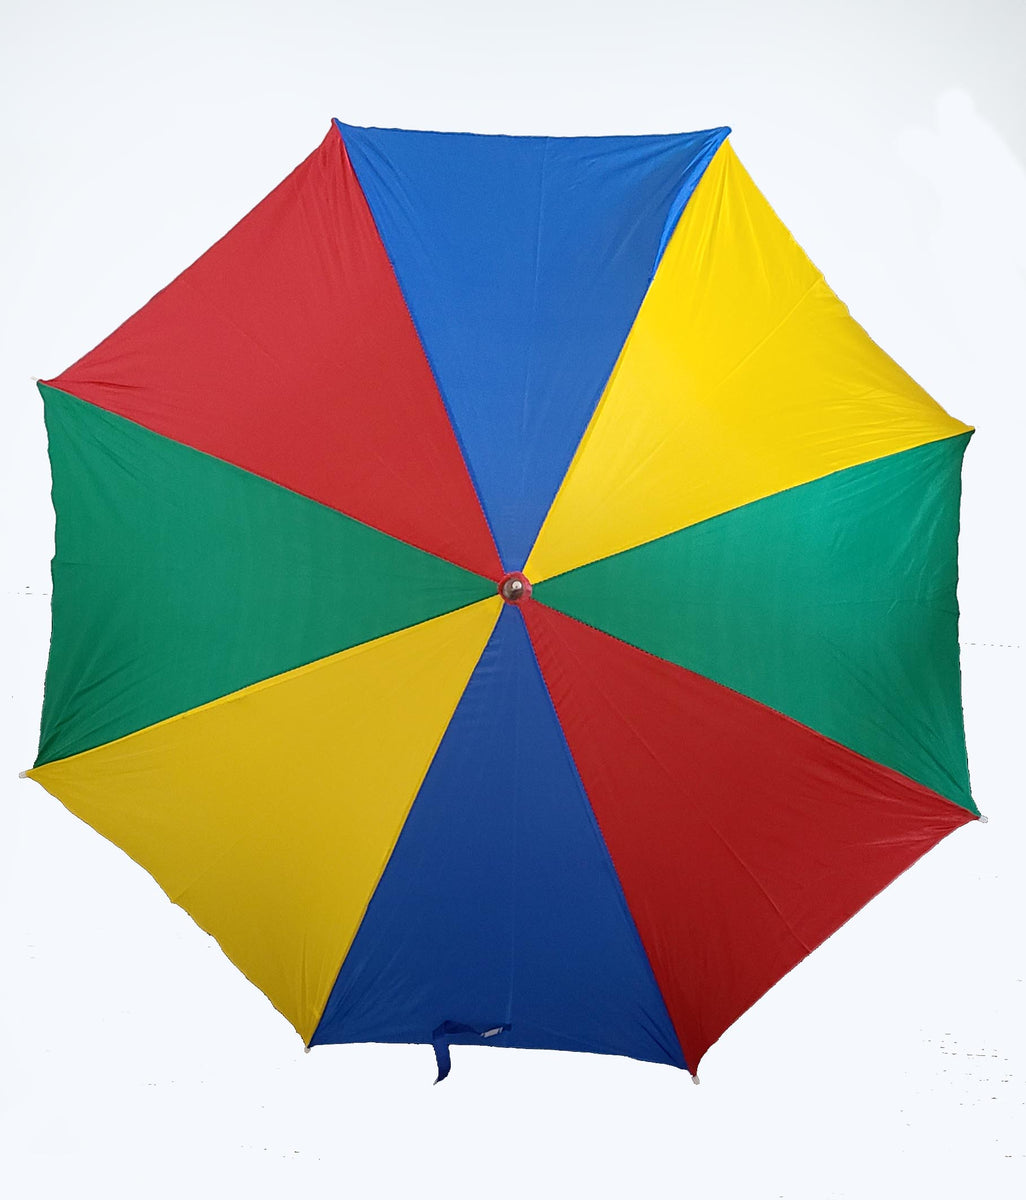 MK91012 - 24inch Regular Auto Hologram Rainbow Umbrella 